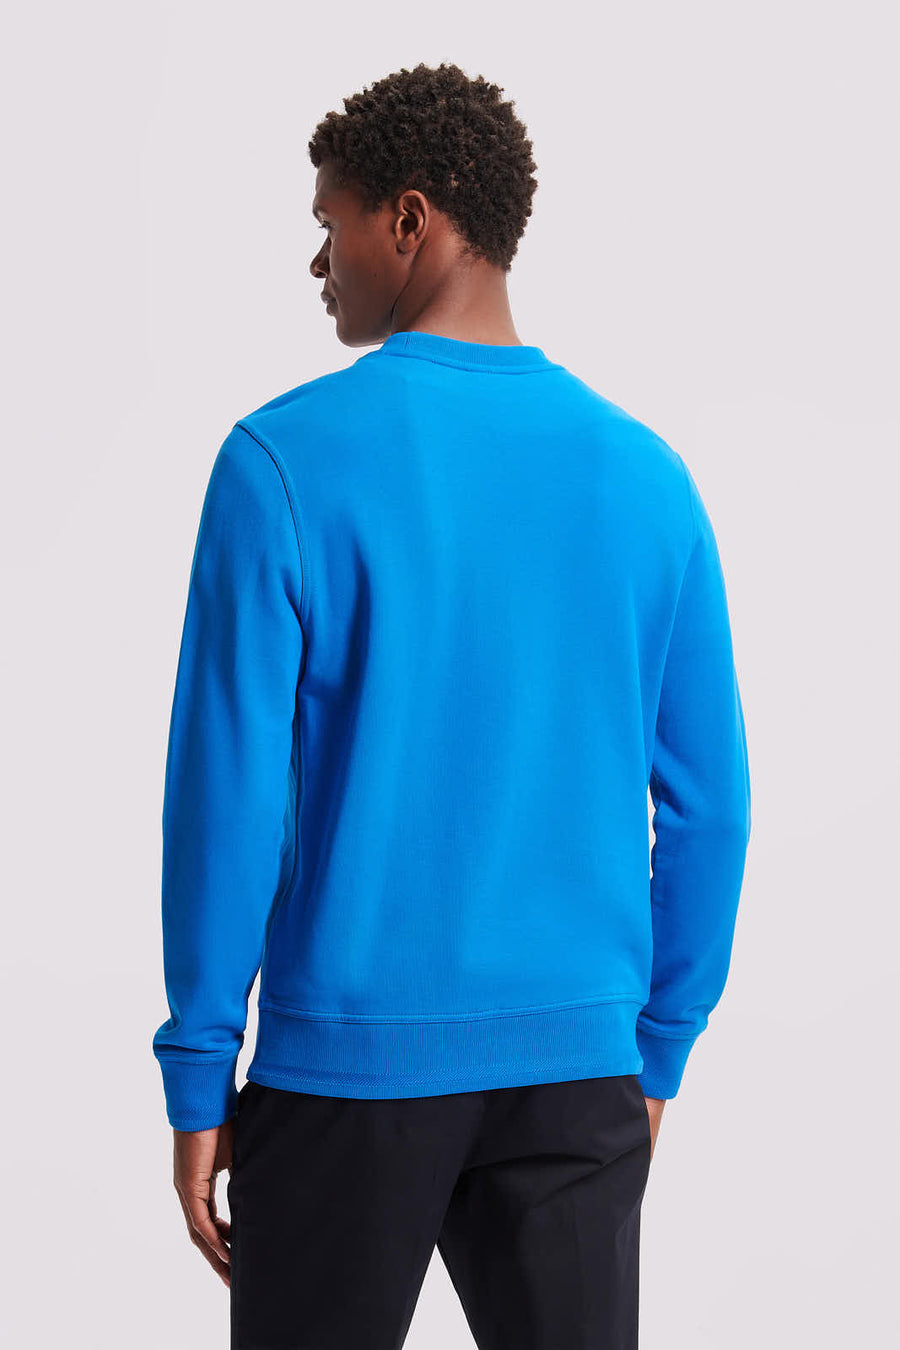 French Terry Crew Neck Sweatshirt in Cobalt Blue